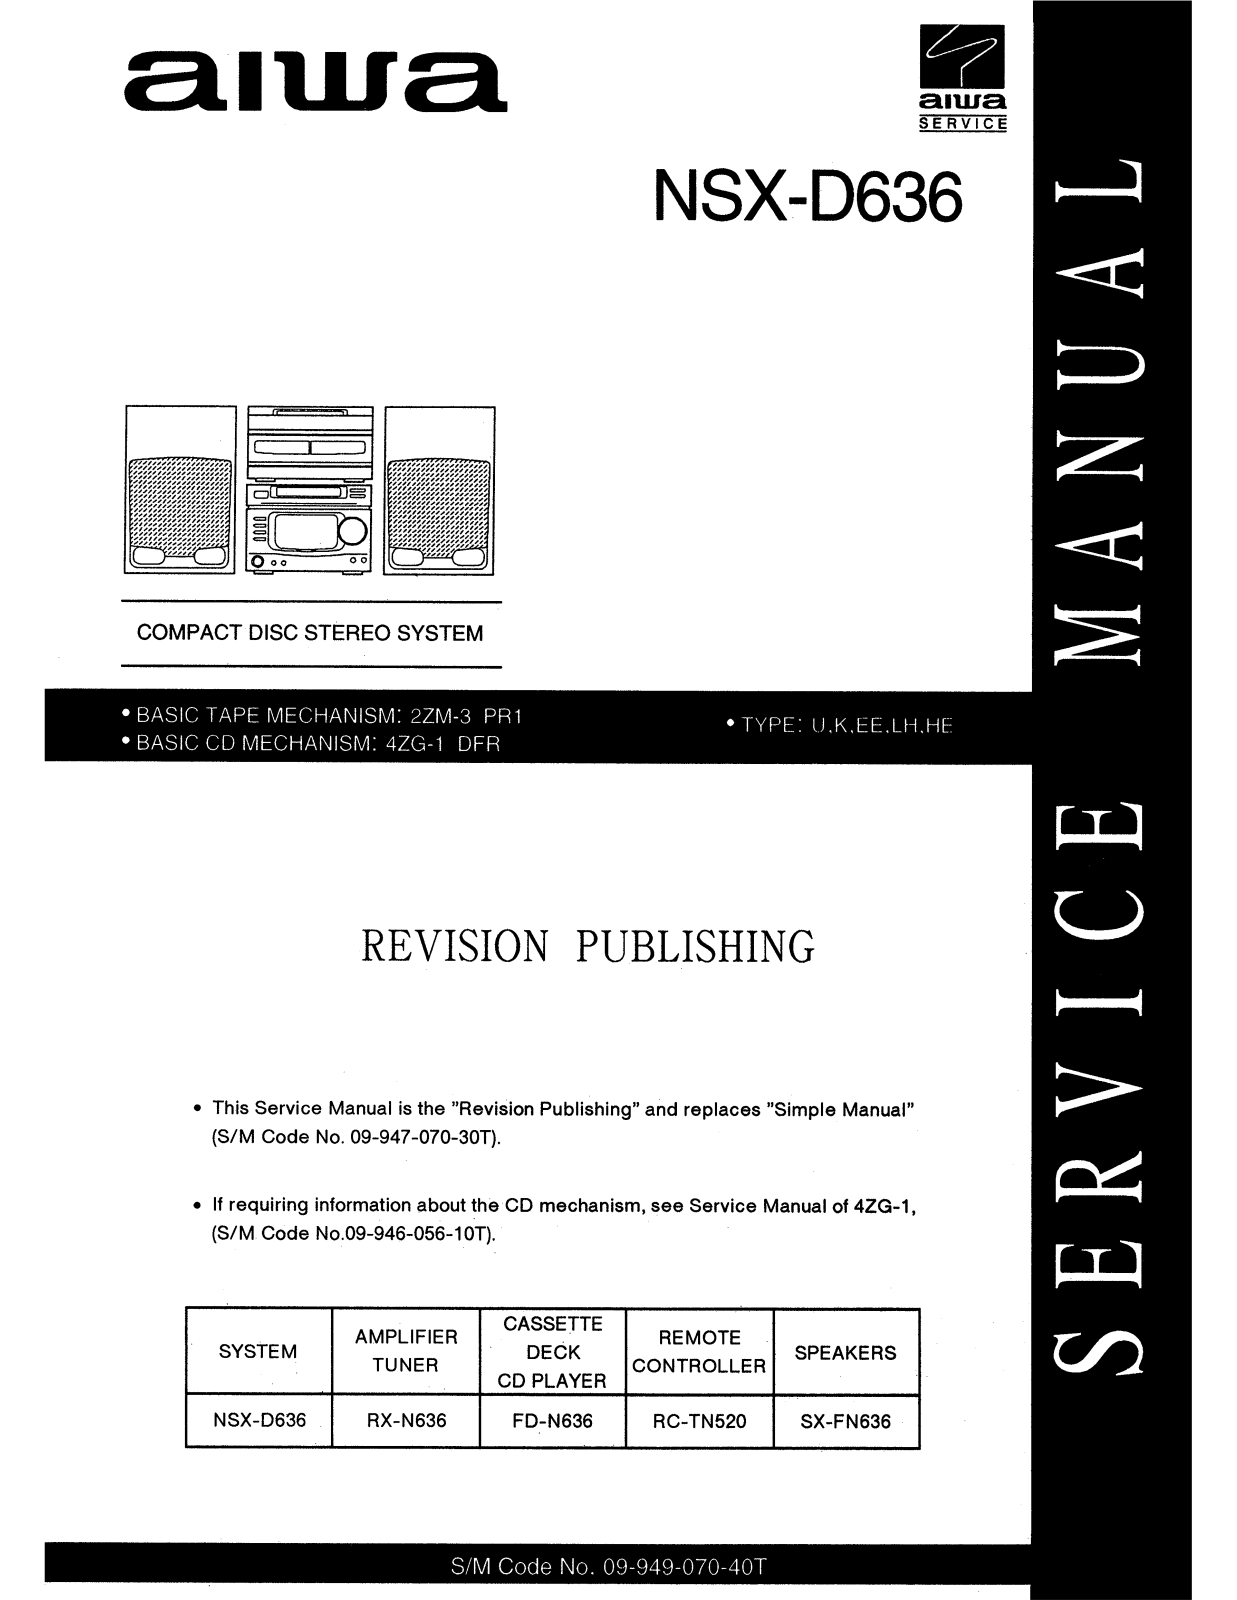 Aiwa nsx-d636 User Manual